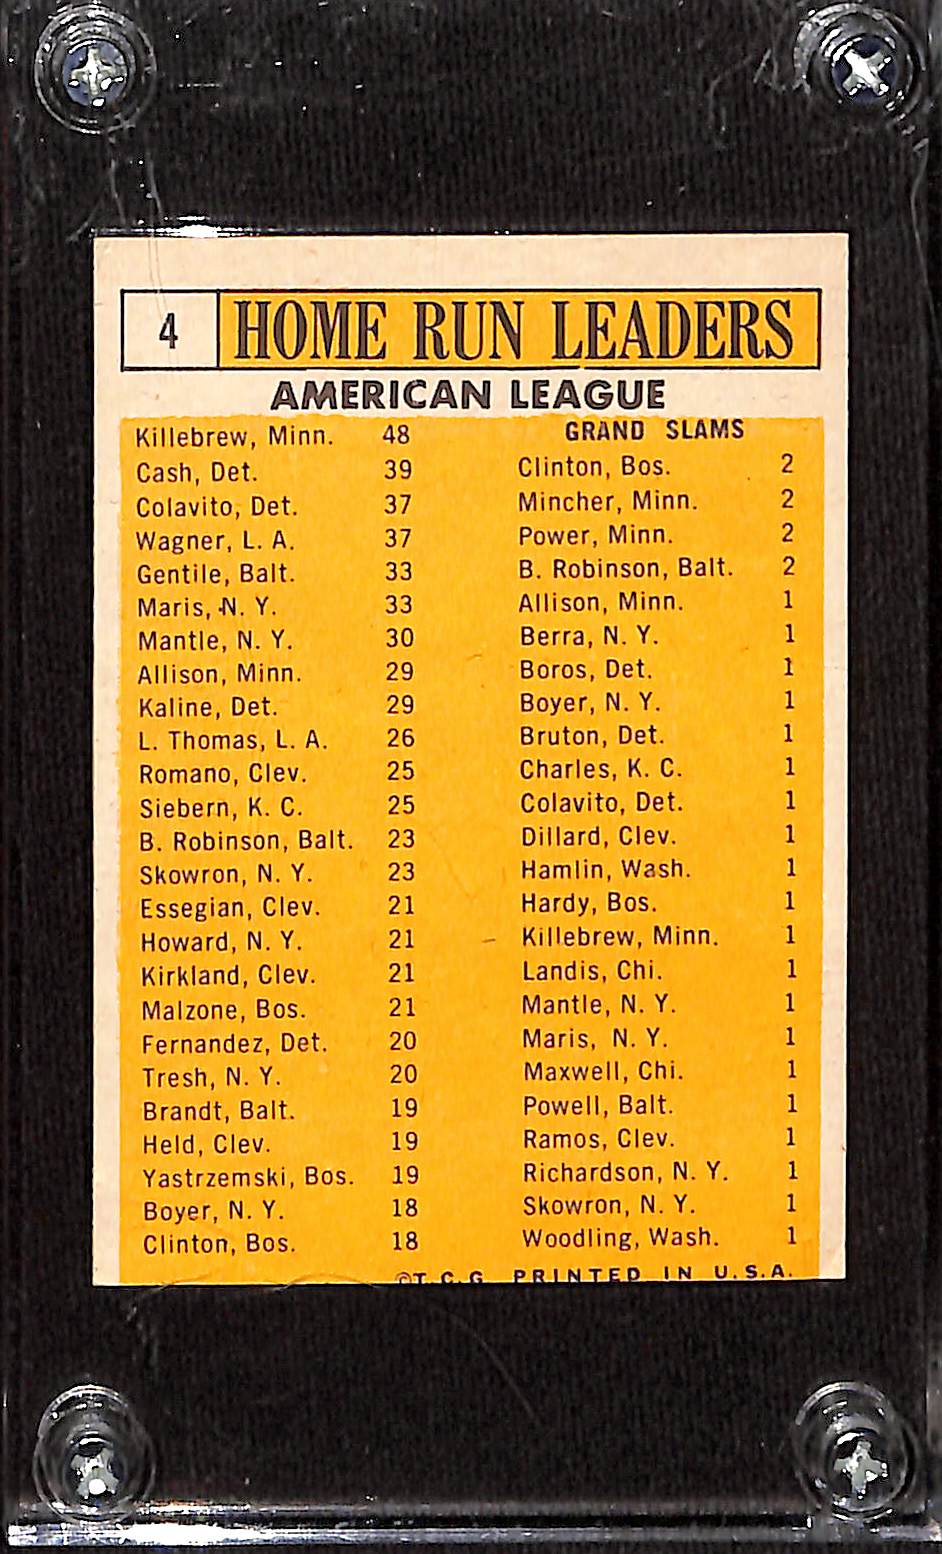 FIINR Baseball Card 1963 AL Topps Home Run Leaders Roger Maris Baseball Card #4 - Mint Condition